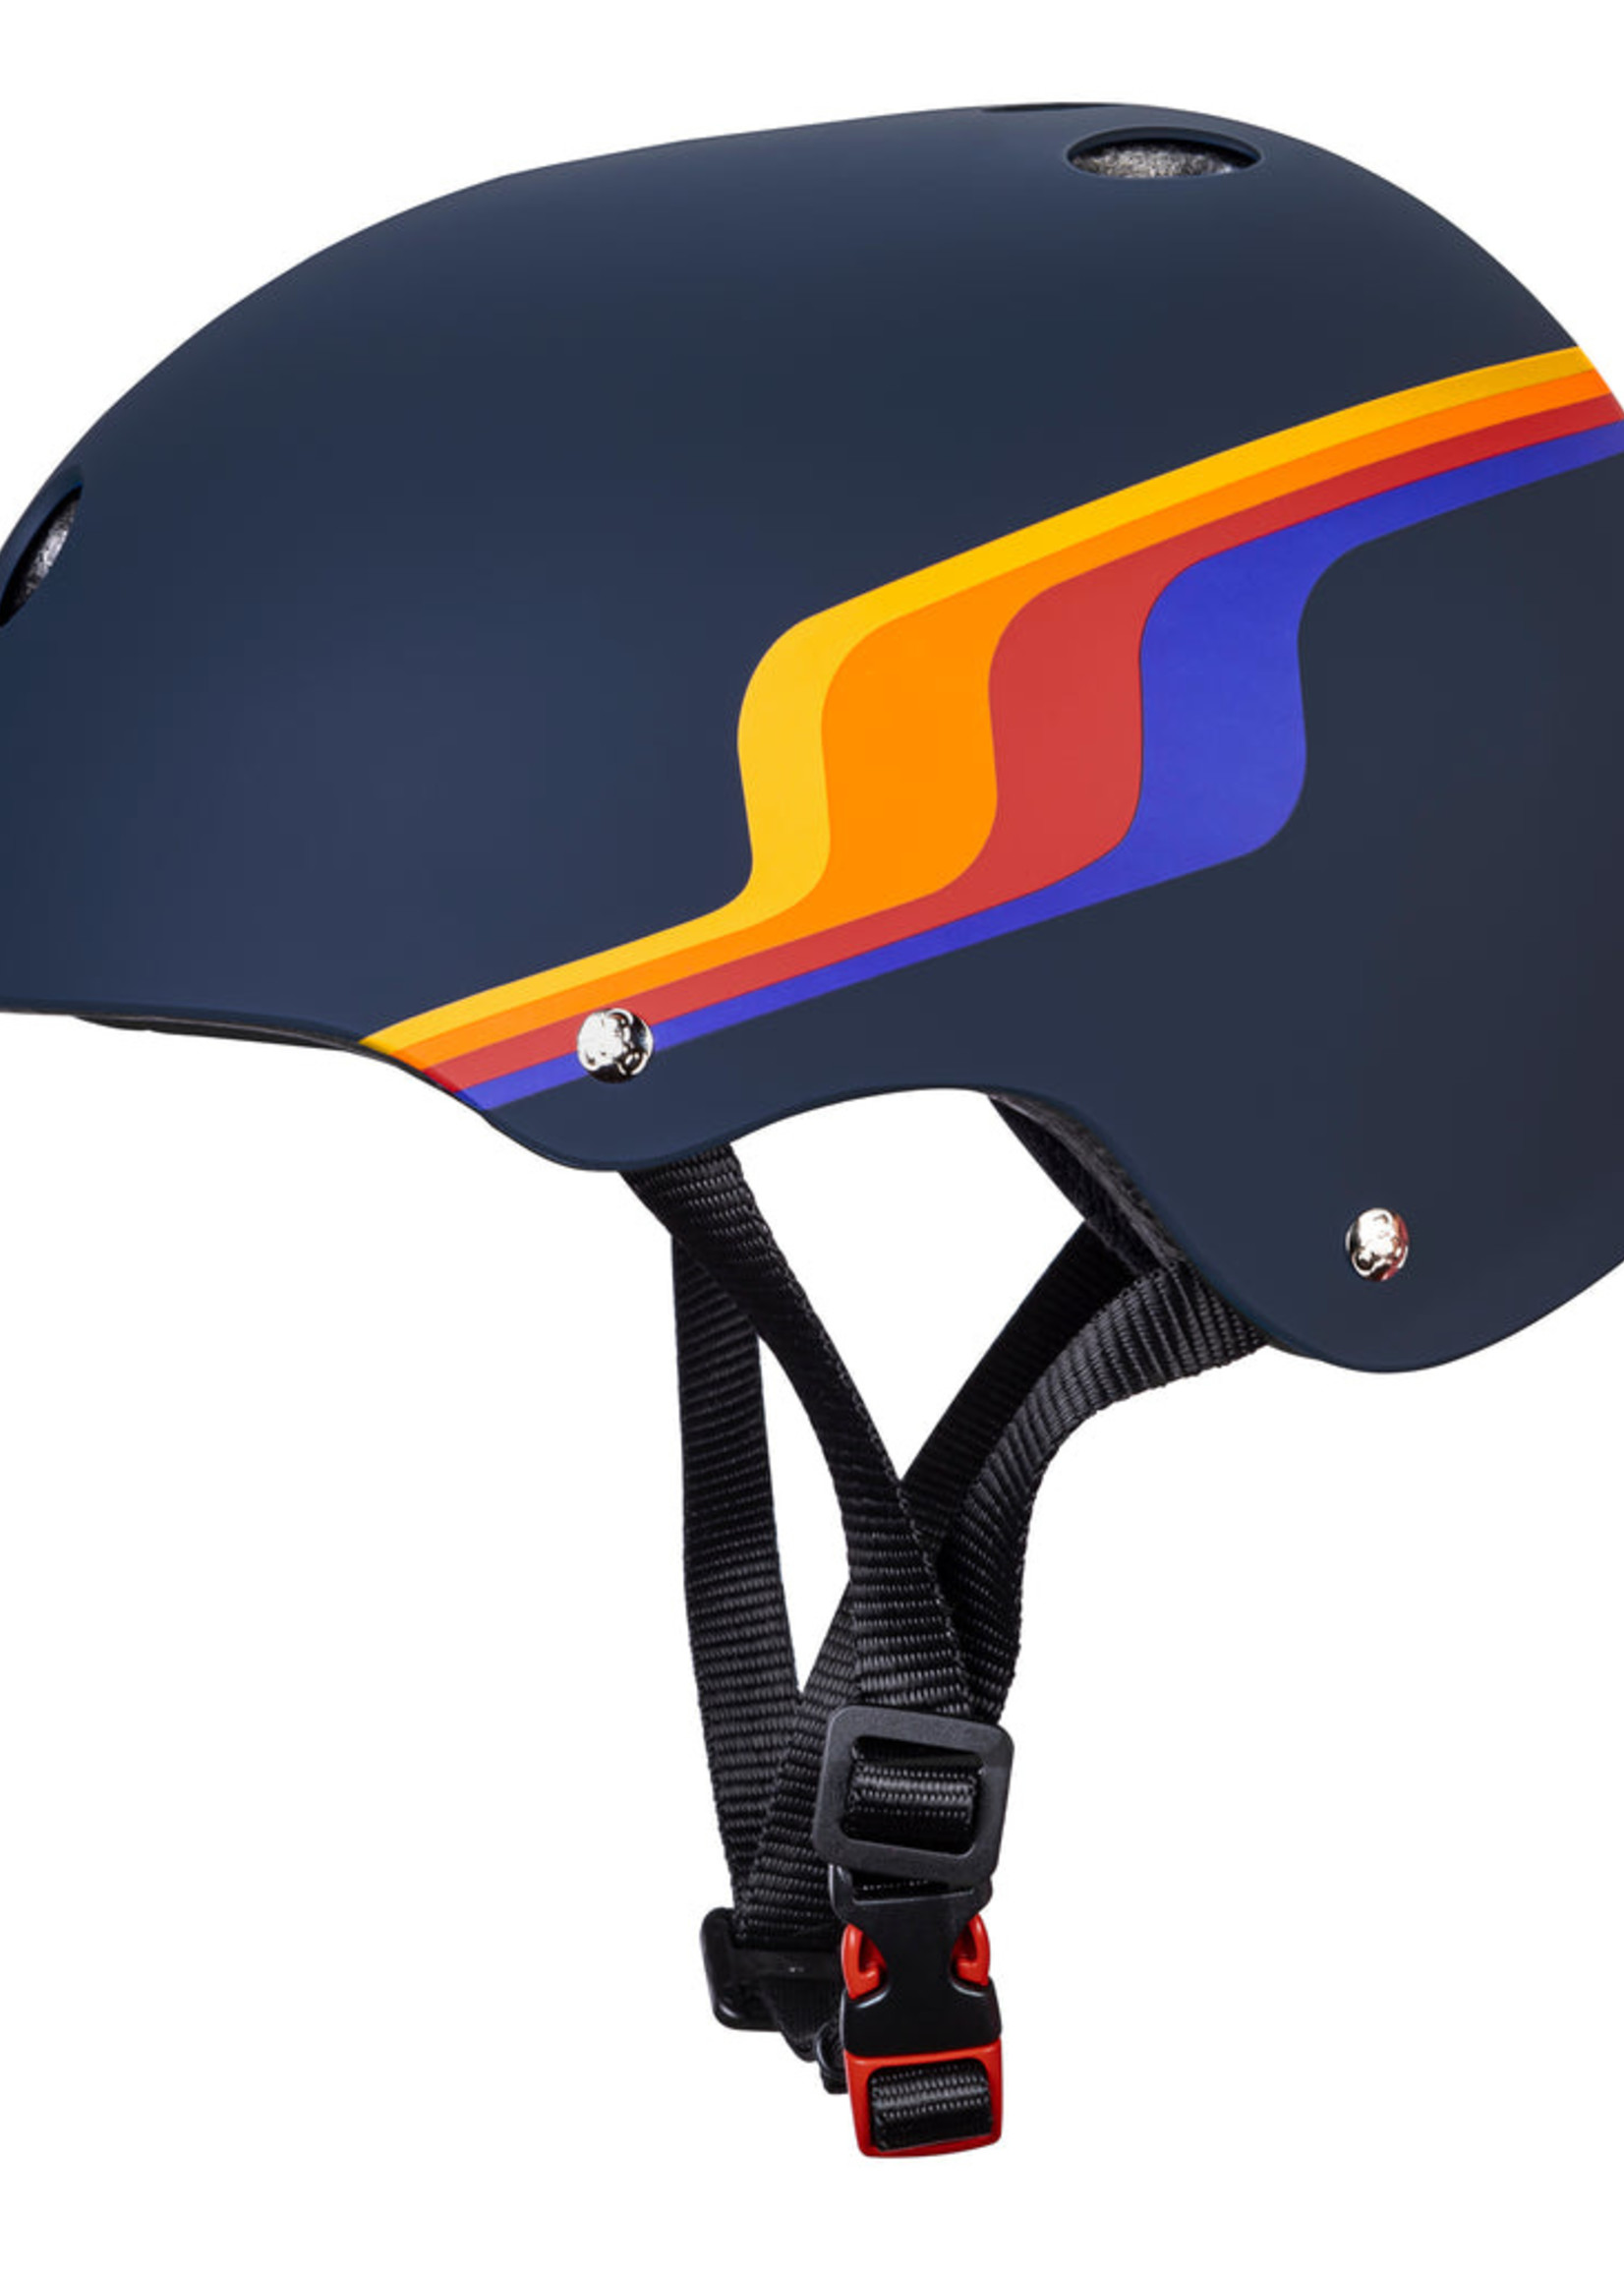 Triple 8 Cert Sweatsaver Helmet - Pacific Beach - XS/S